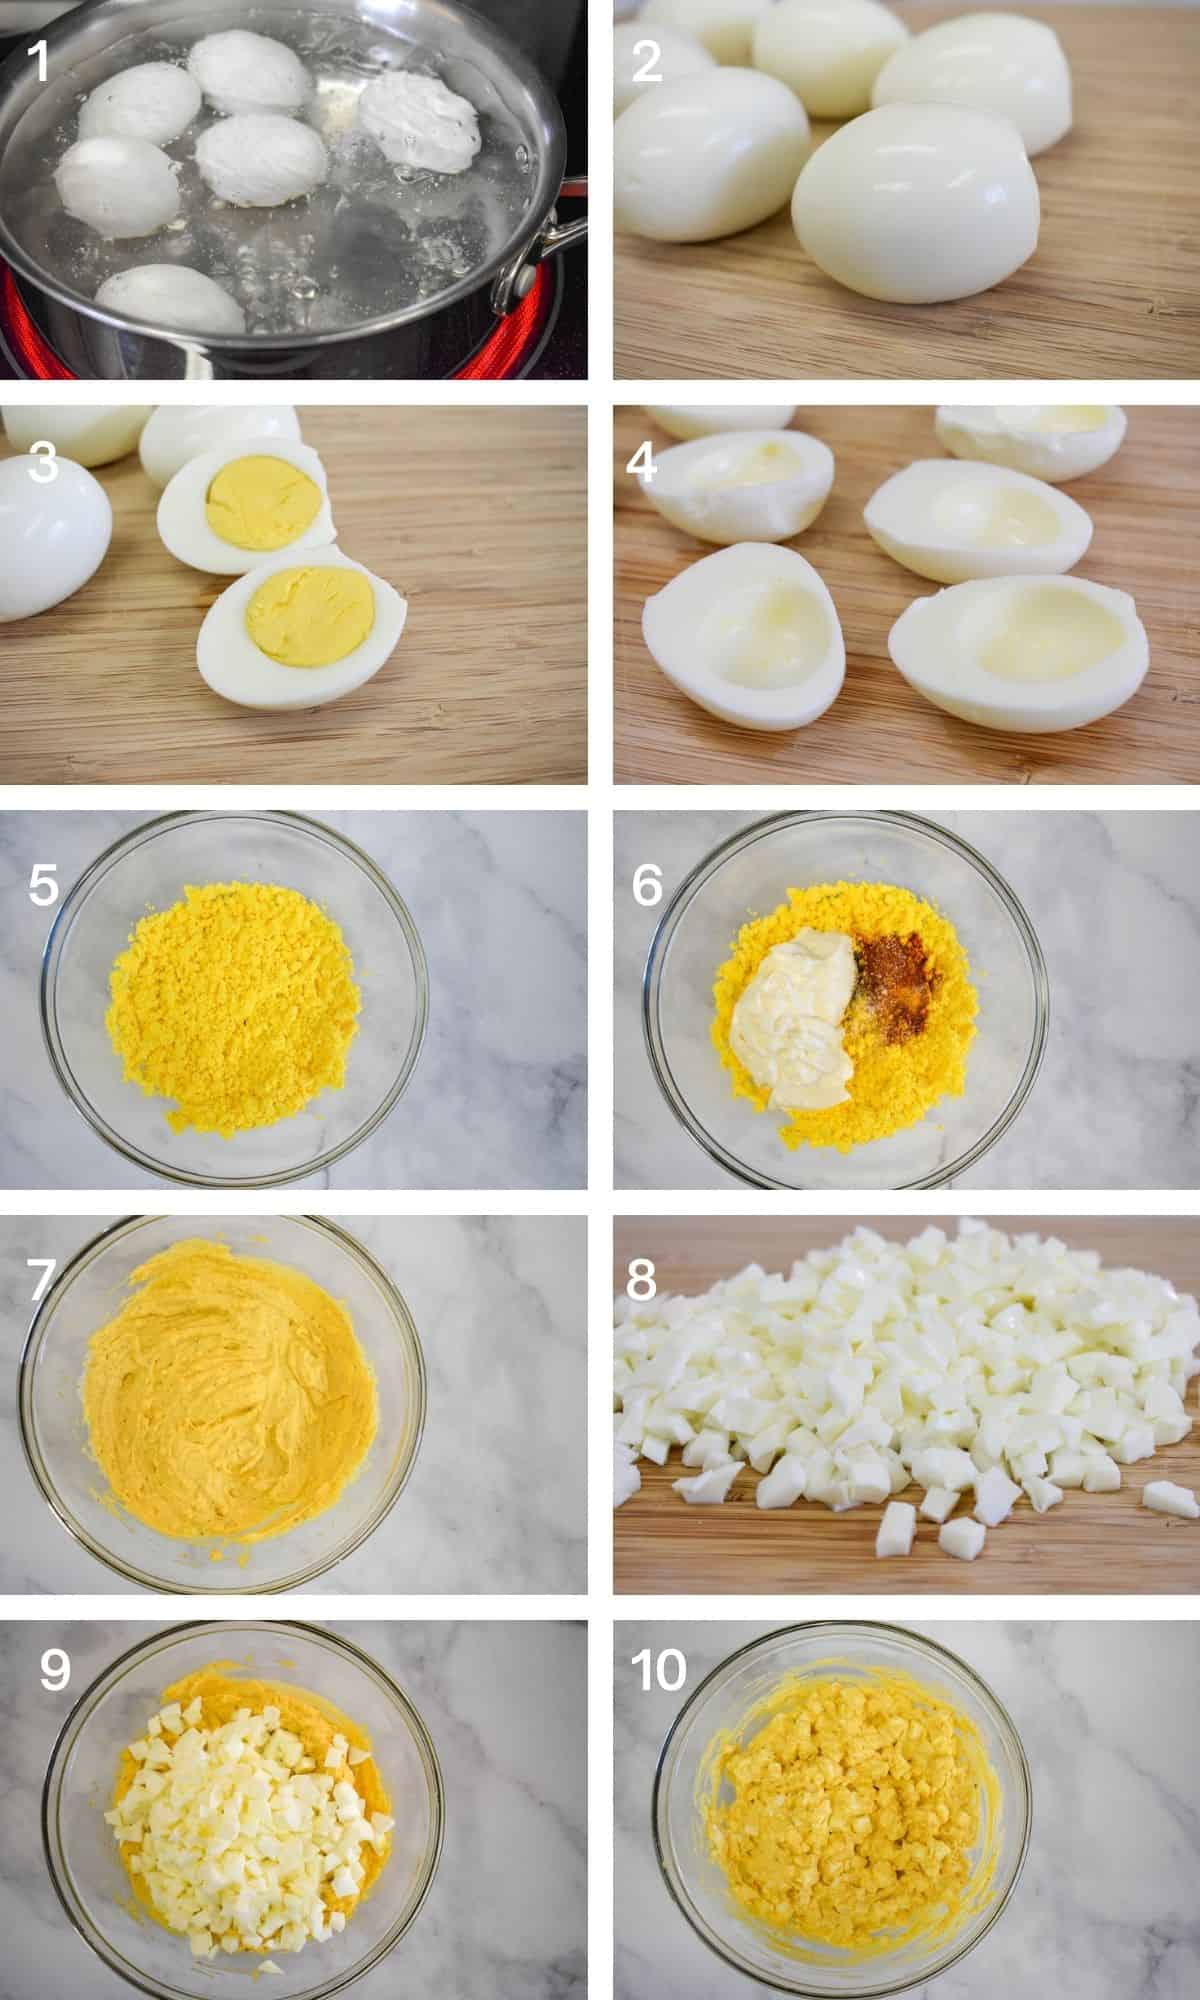 A collage of ten images illustrating the steps to make egg salad.